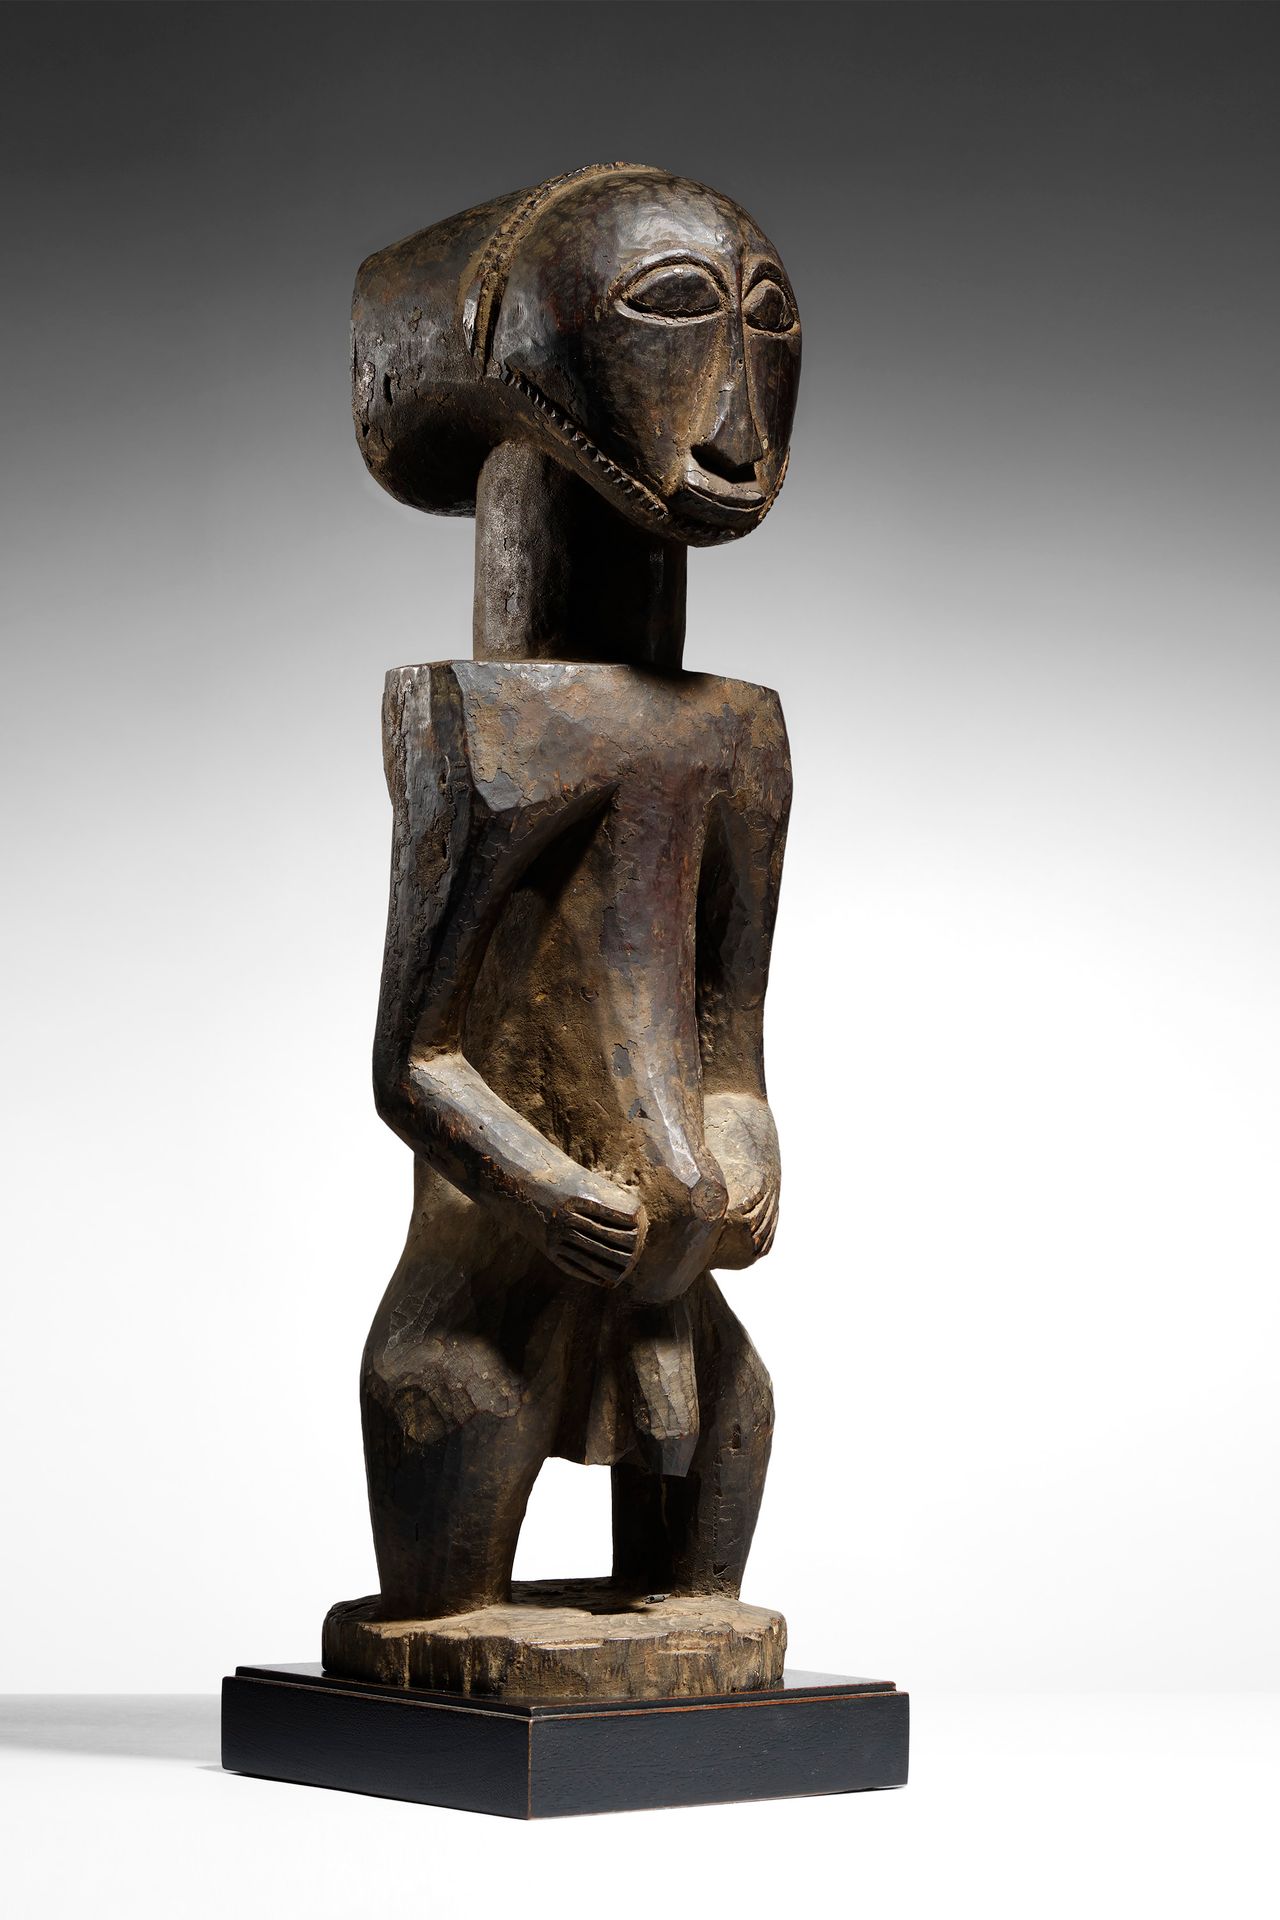 Hemba Figure D.R. Congo

木材 - 64厘米

出处。

米歇尔-高德收藏，圣特罗佩

私人收藏，比利时